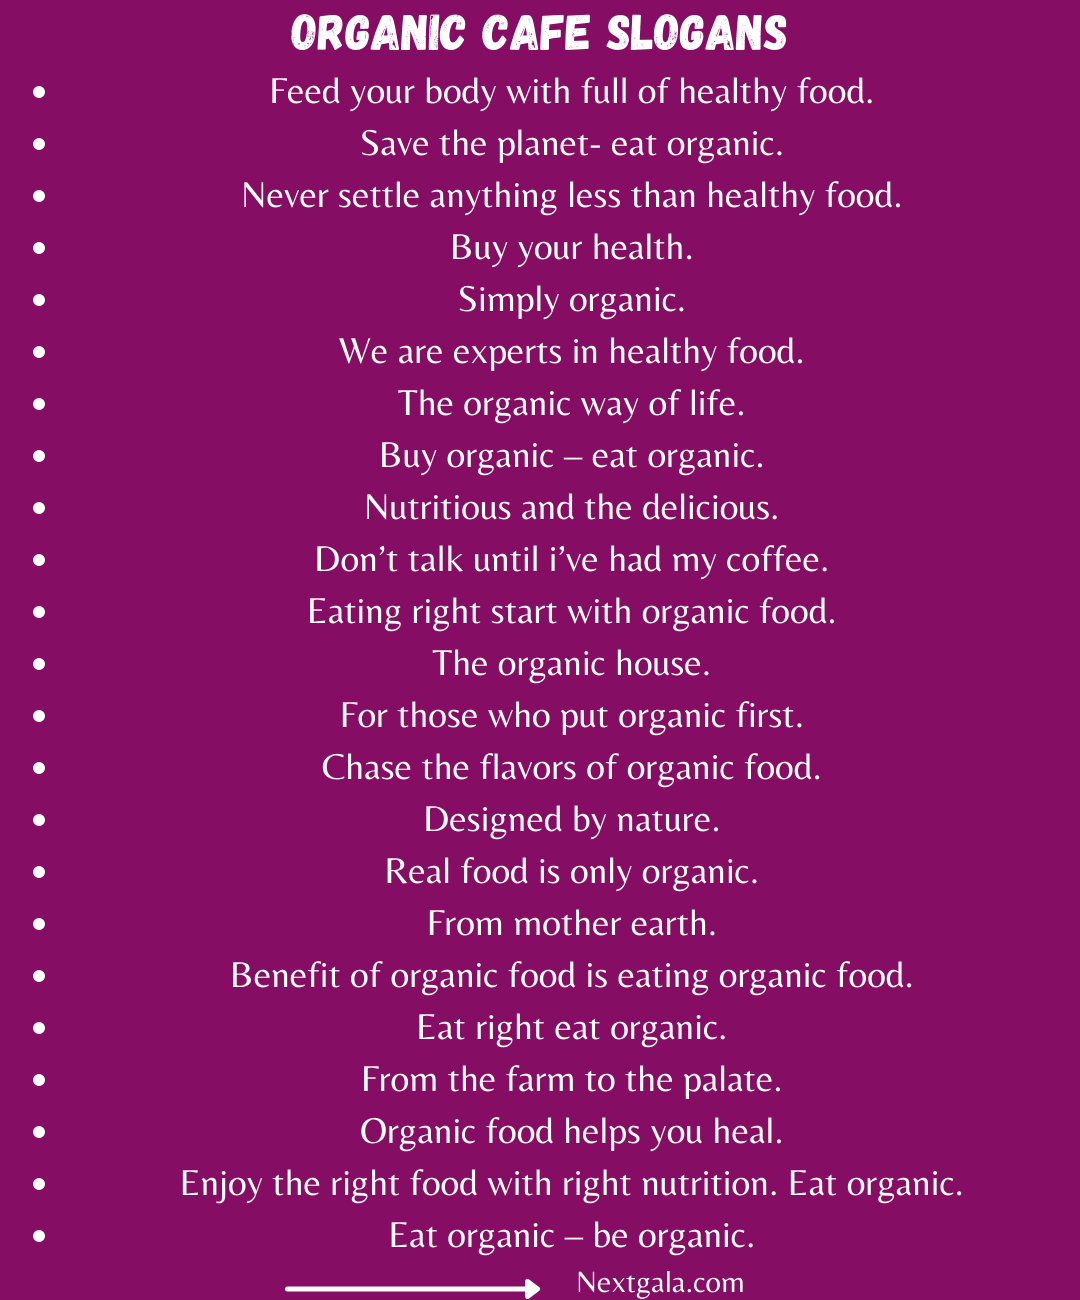 Organic Cafe Slogans